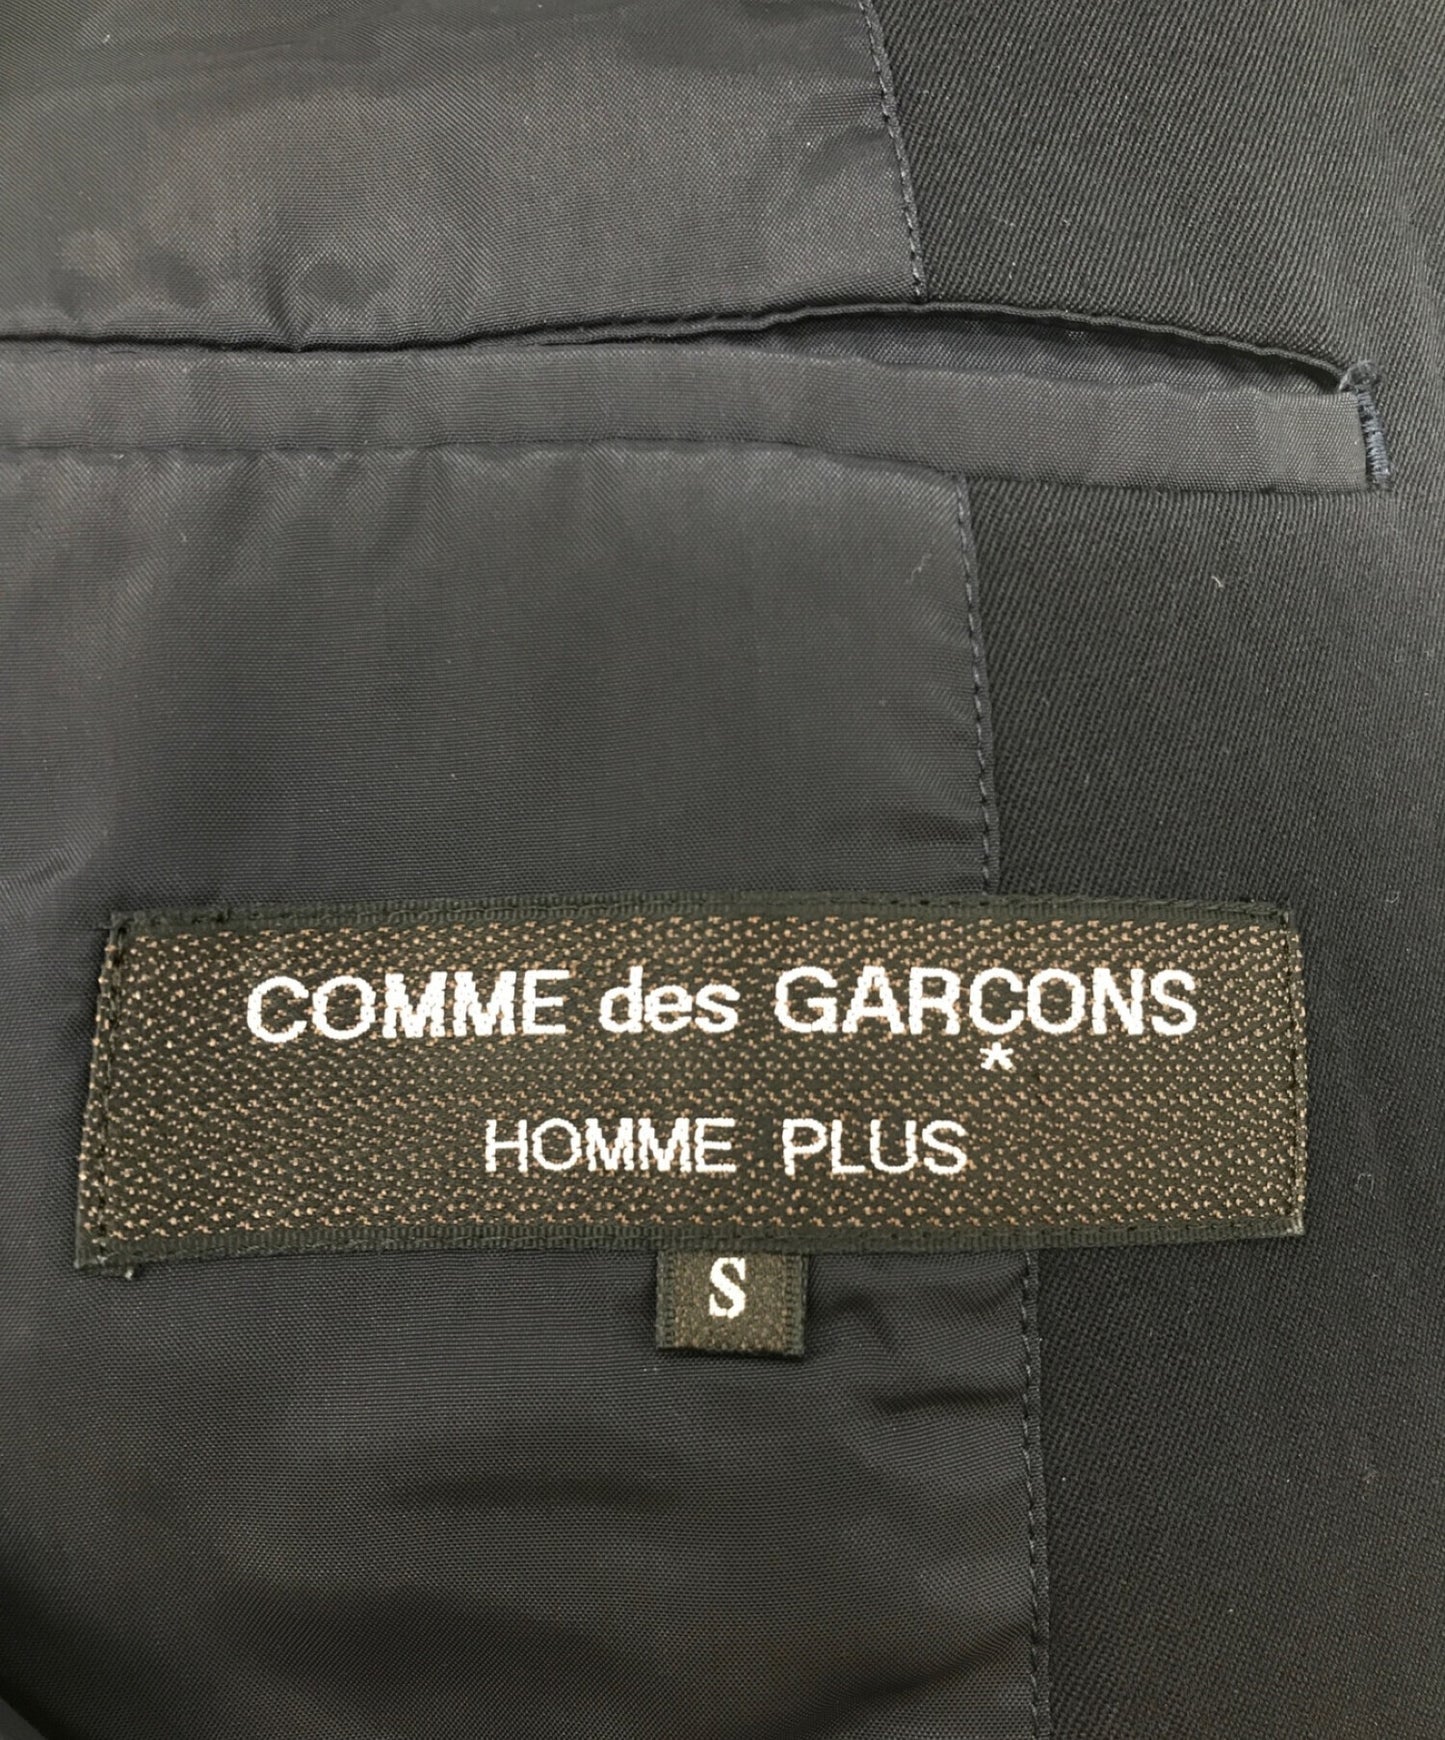 Comme des Garcons Homme Plus 80 년대 스위치 양모 더블 재킷 양모 양식 더블 재킷 더블 재킷 재킷 PJ-05031S AD1989